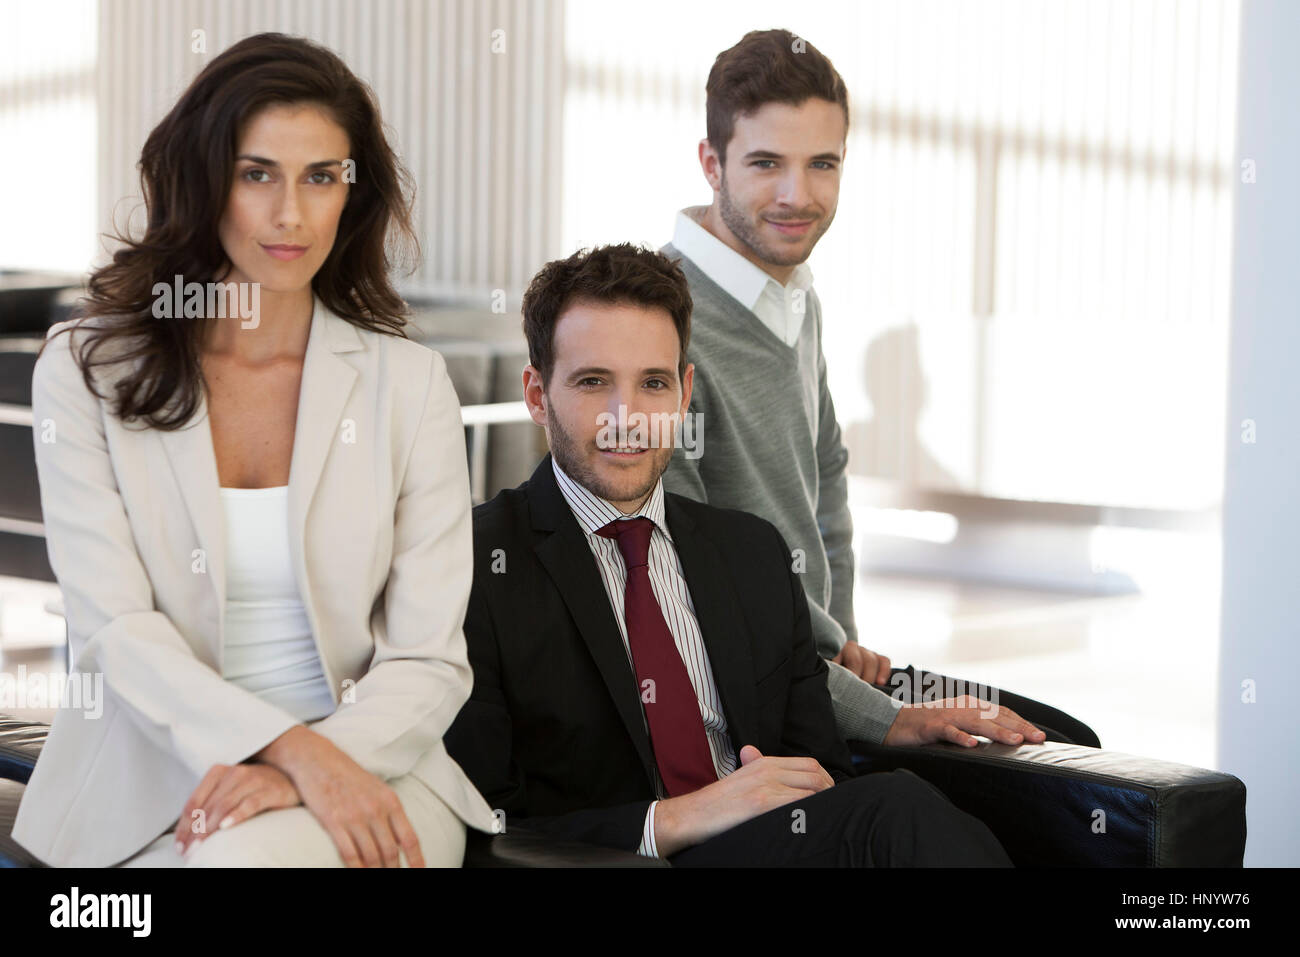 Business professionals, portrait Stock Photo